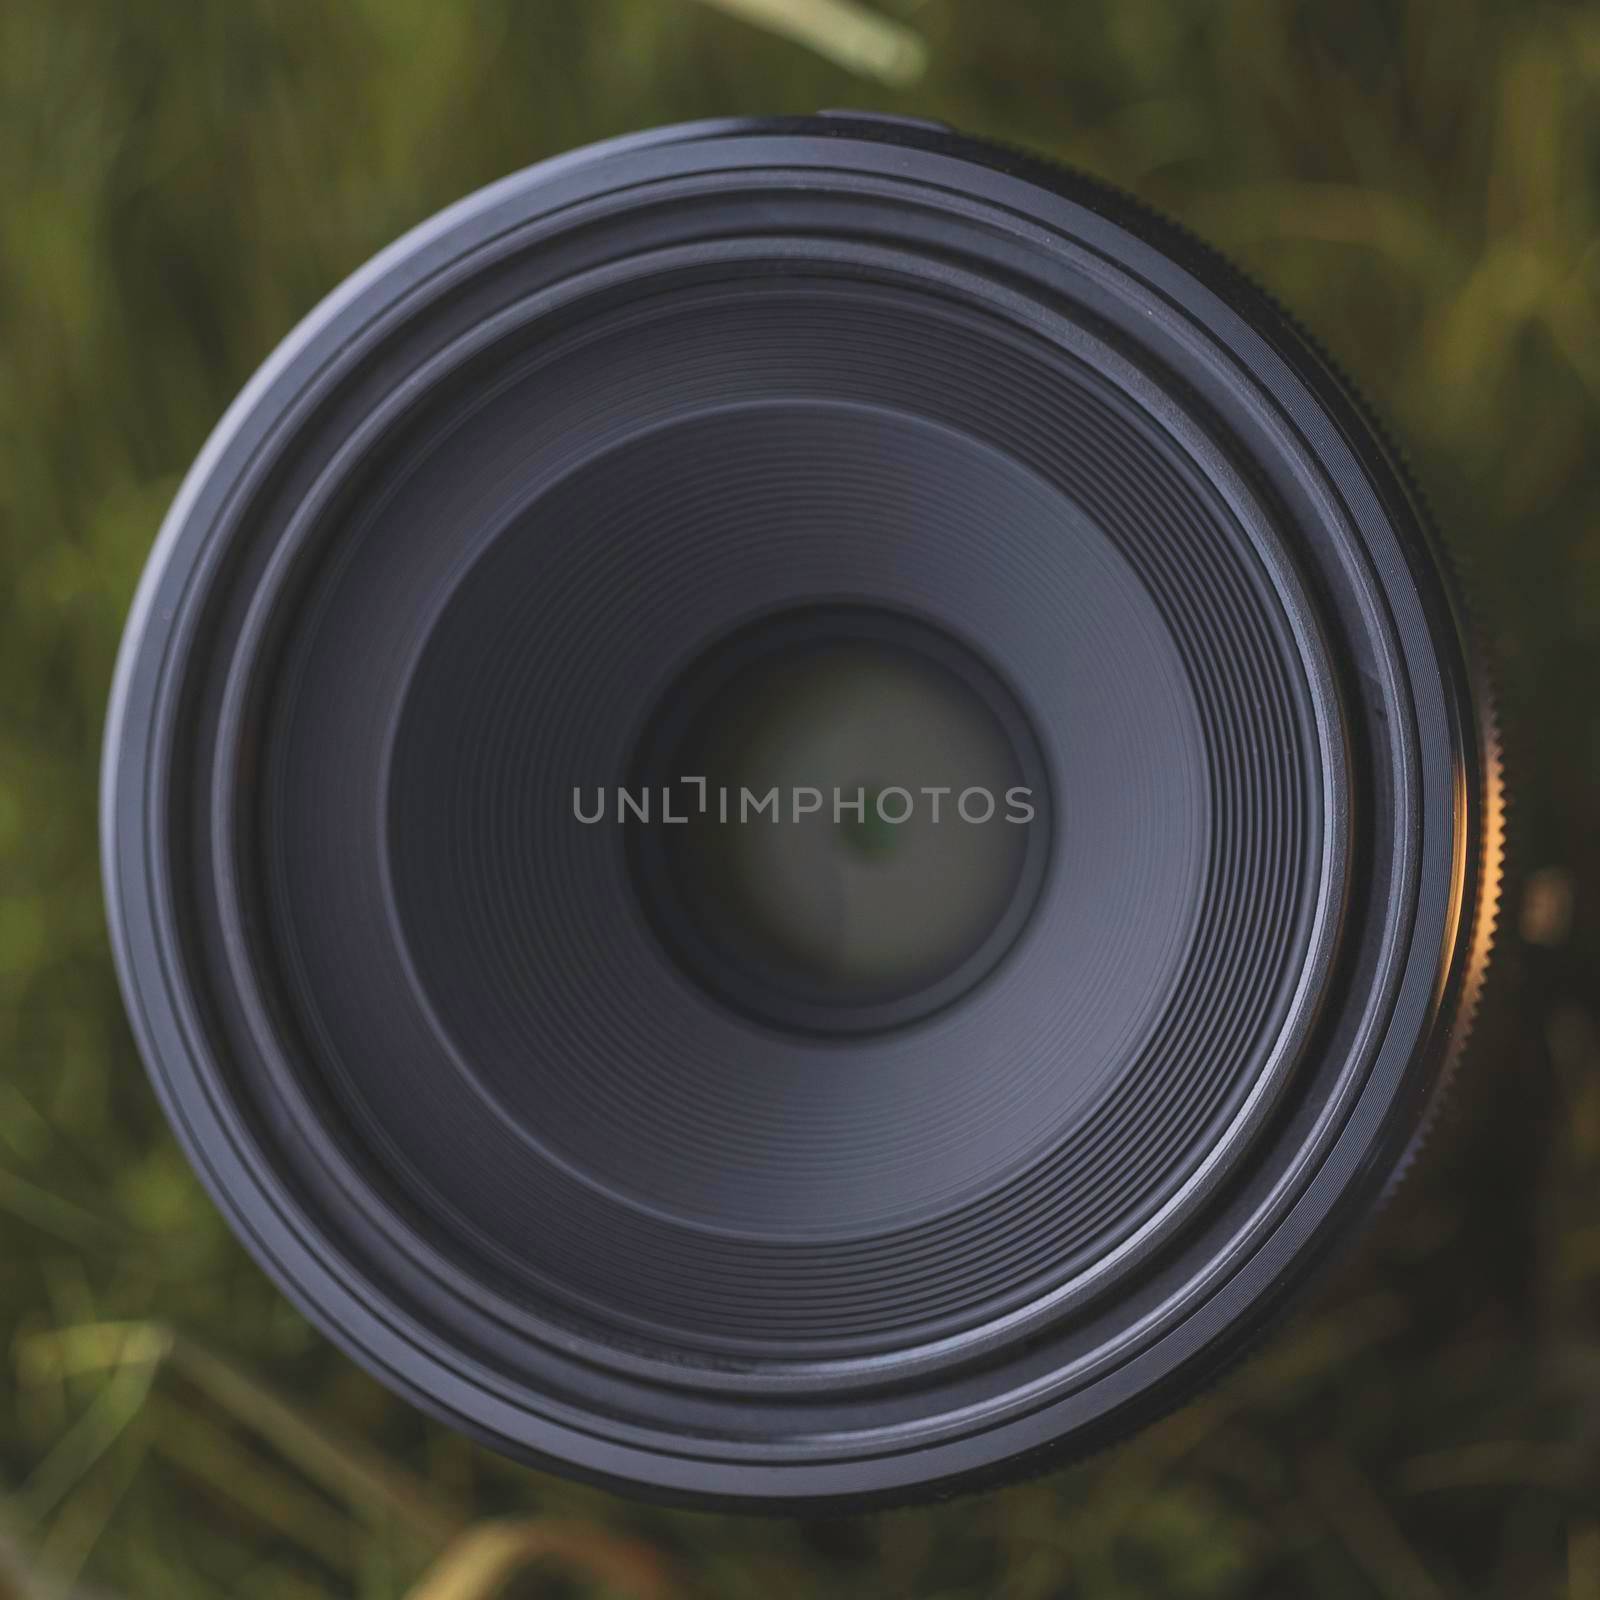 Macro camera lens in grass. High quality macro photo.